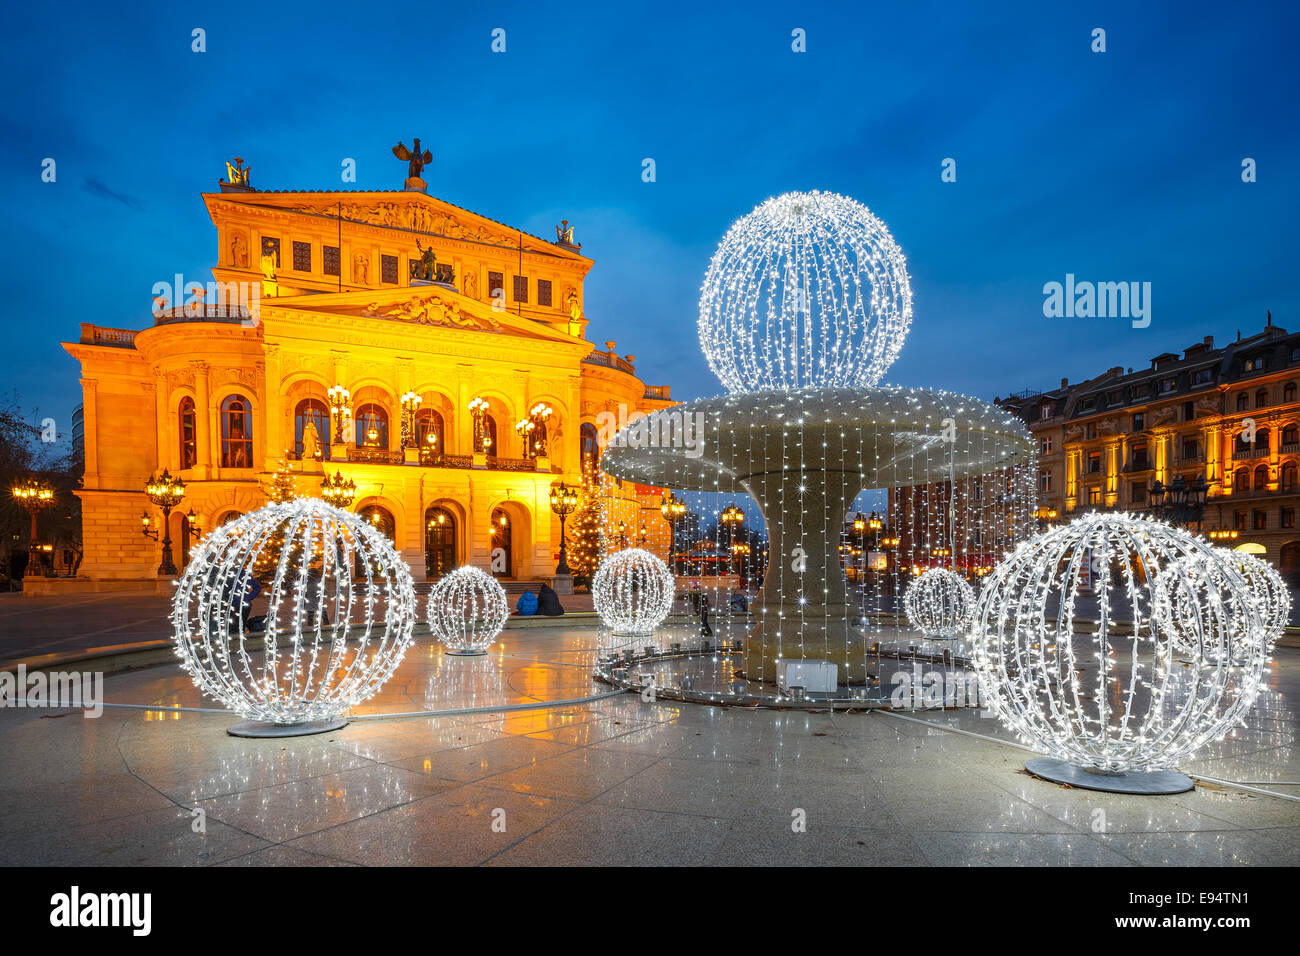 Alte Oper in Frankfurt Stock Photo